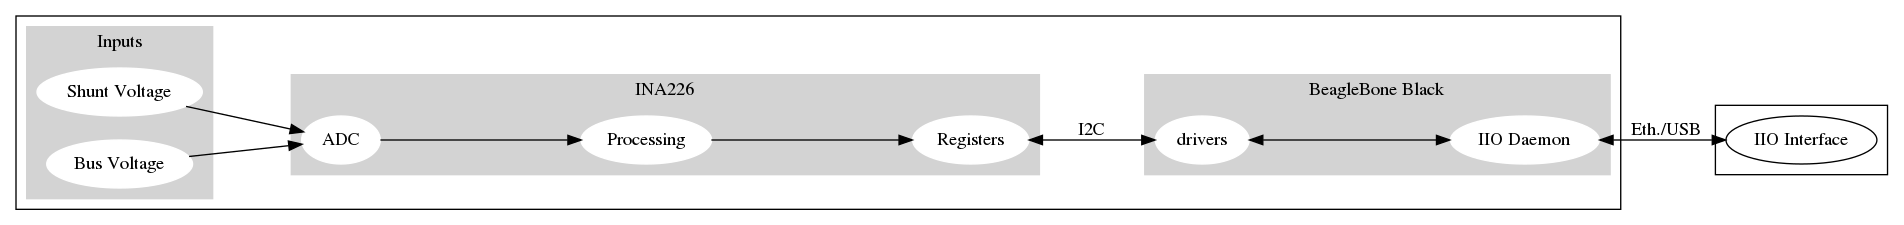 digraph target {
    rankdir = LR
    bgcolor = transparent

    subgraph cluster_target {

        subgraph cluster_BBB {
            node [style = filled, color = white];
            style = filled;
            color = lightgrey;
            label = "BeagleBone Black";

            drivers -> "IIO Daemon" [dir = both]
        }

        subgraph cluster_INA226 {
            node [style = filled, color = white];
            style = filled;
            color = lightgrey;
            label = INA226;

            ADC -> Processing
            Processing -> Registers
        }

        subgraph cluster_inputs {
            node [style = filled, color = white];
            style = filled;
            color = lightgrey;
            label = Inputs;

            "Bus Voltage" -> ADC;
            "Shunt Voltage" -> ADC;
        }

        Registers -> drivers [dir = both, label = I2C];
    }

    subgraph cluster_IIO {
        style = none
        "IIO Daemon" -> "IIO Interface" [dir = both, label = "Eth./USB"]
    }
}